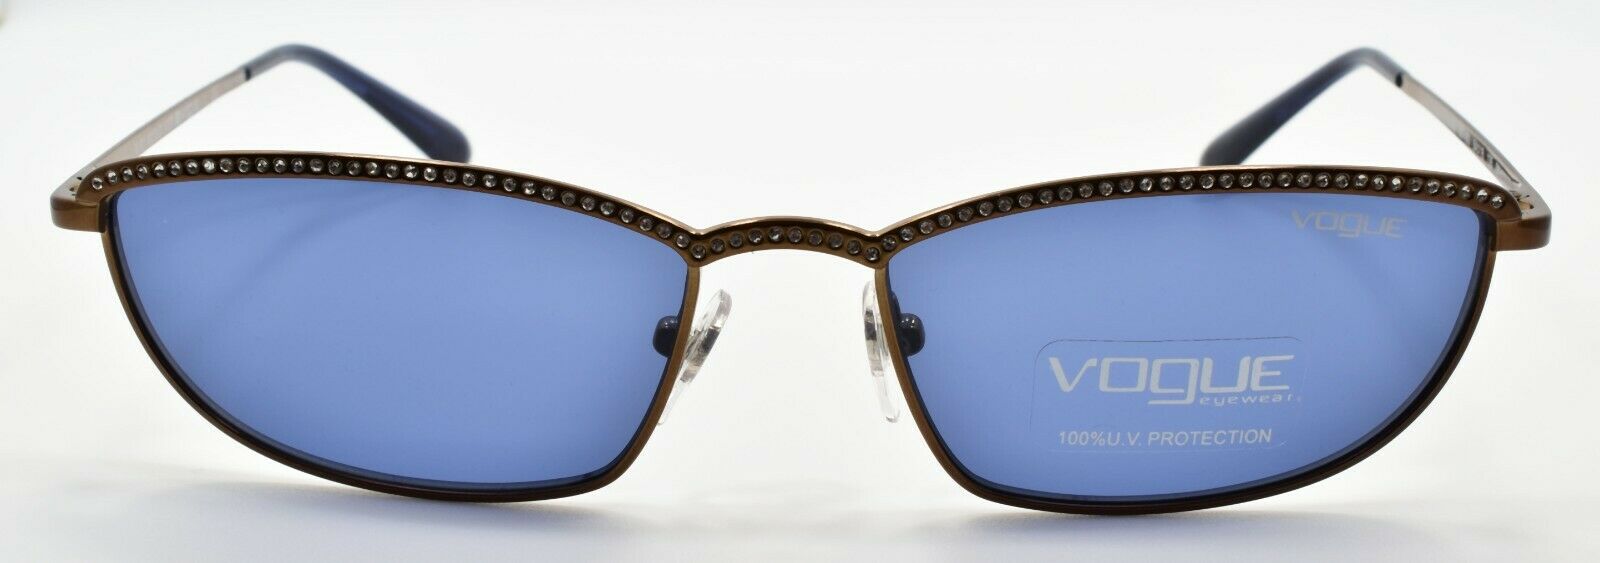 2-Vogue x Gigi Hadid VO4139SB 507480 Women's Sunglasses Copper Brown / Blue-8056597048668-IKSpecs